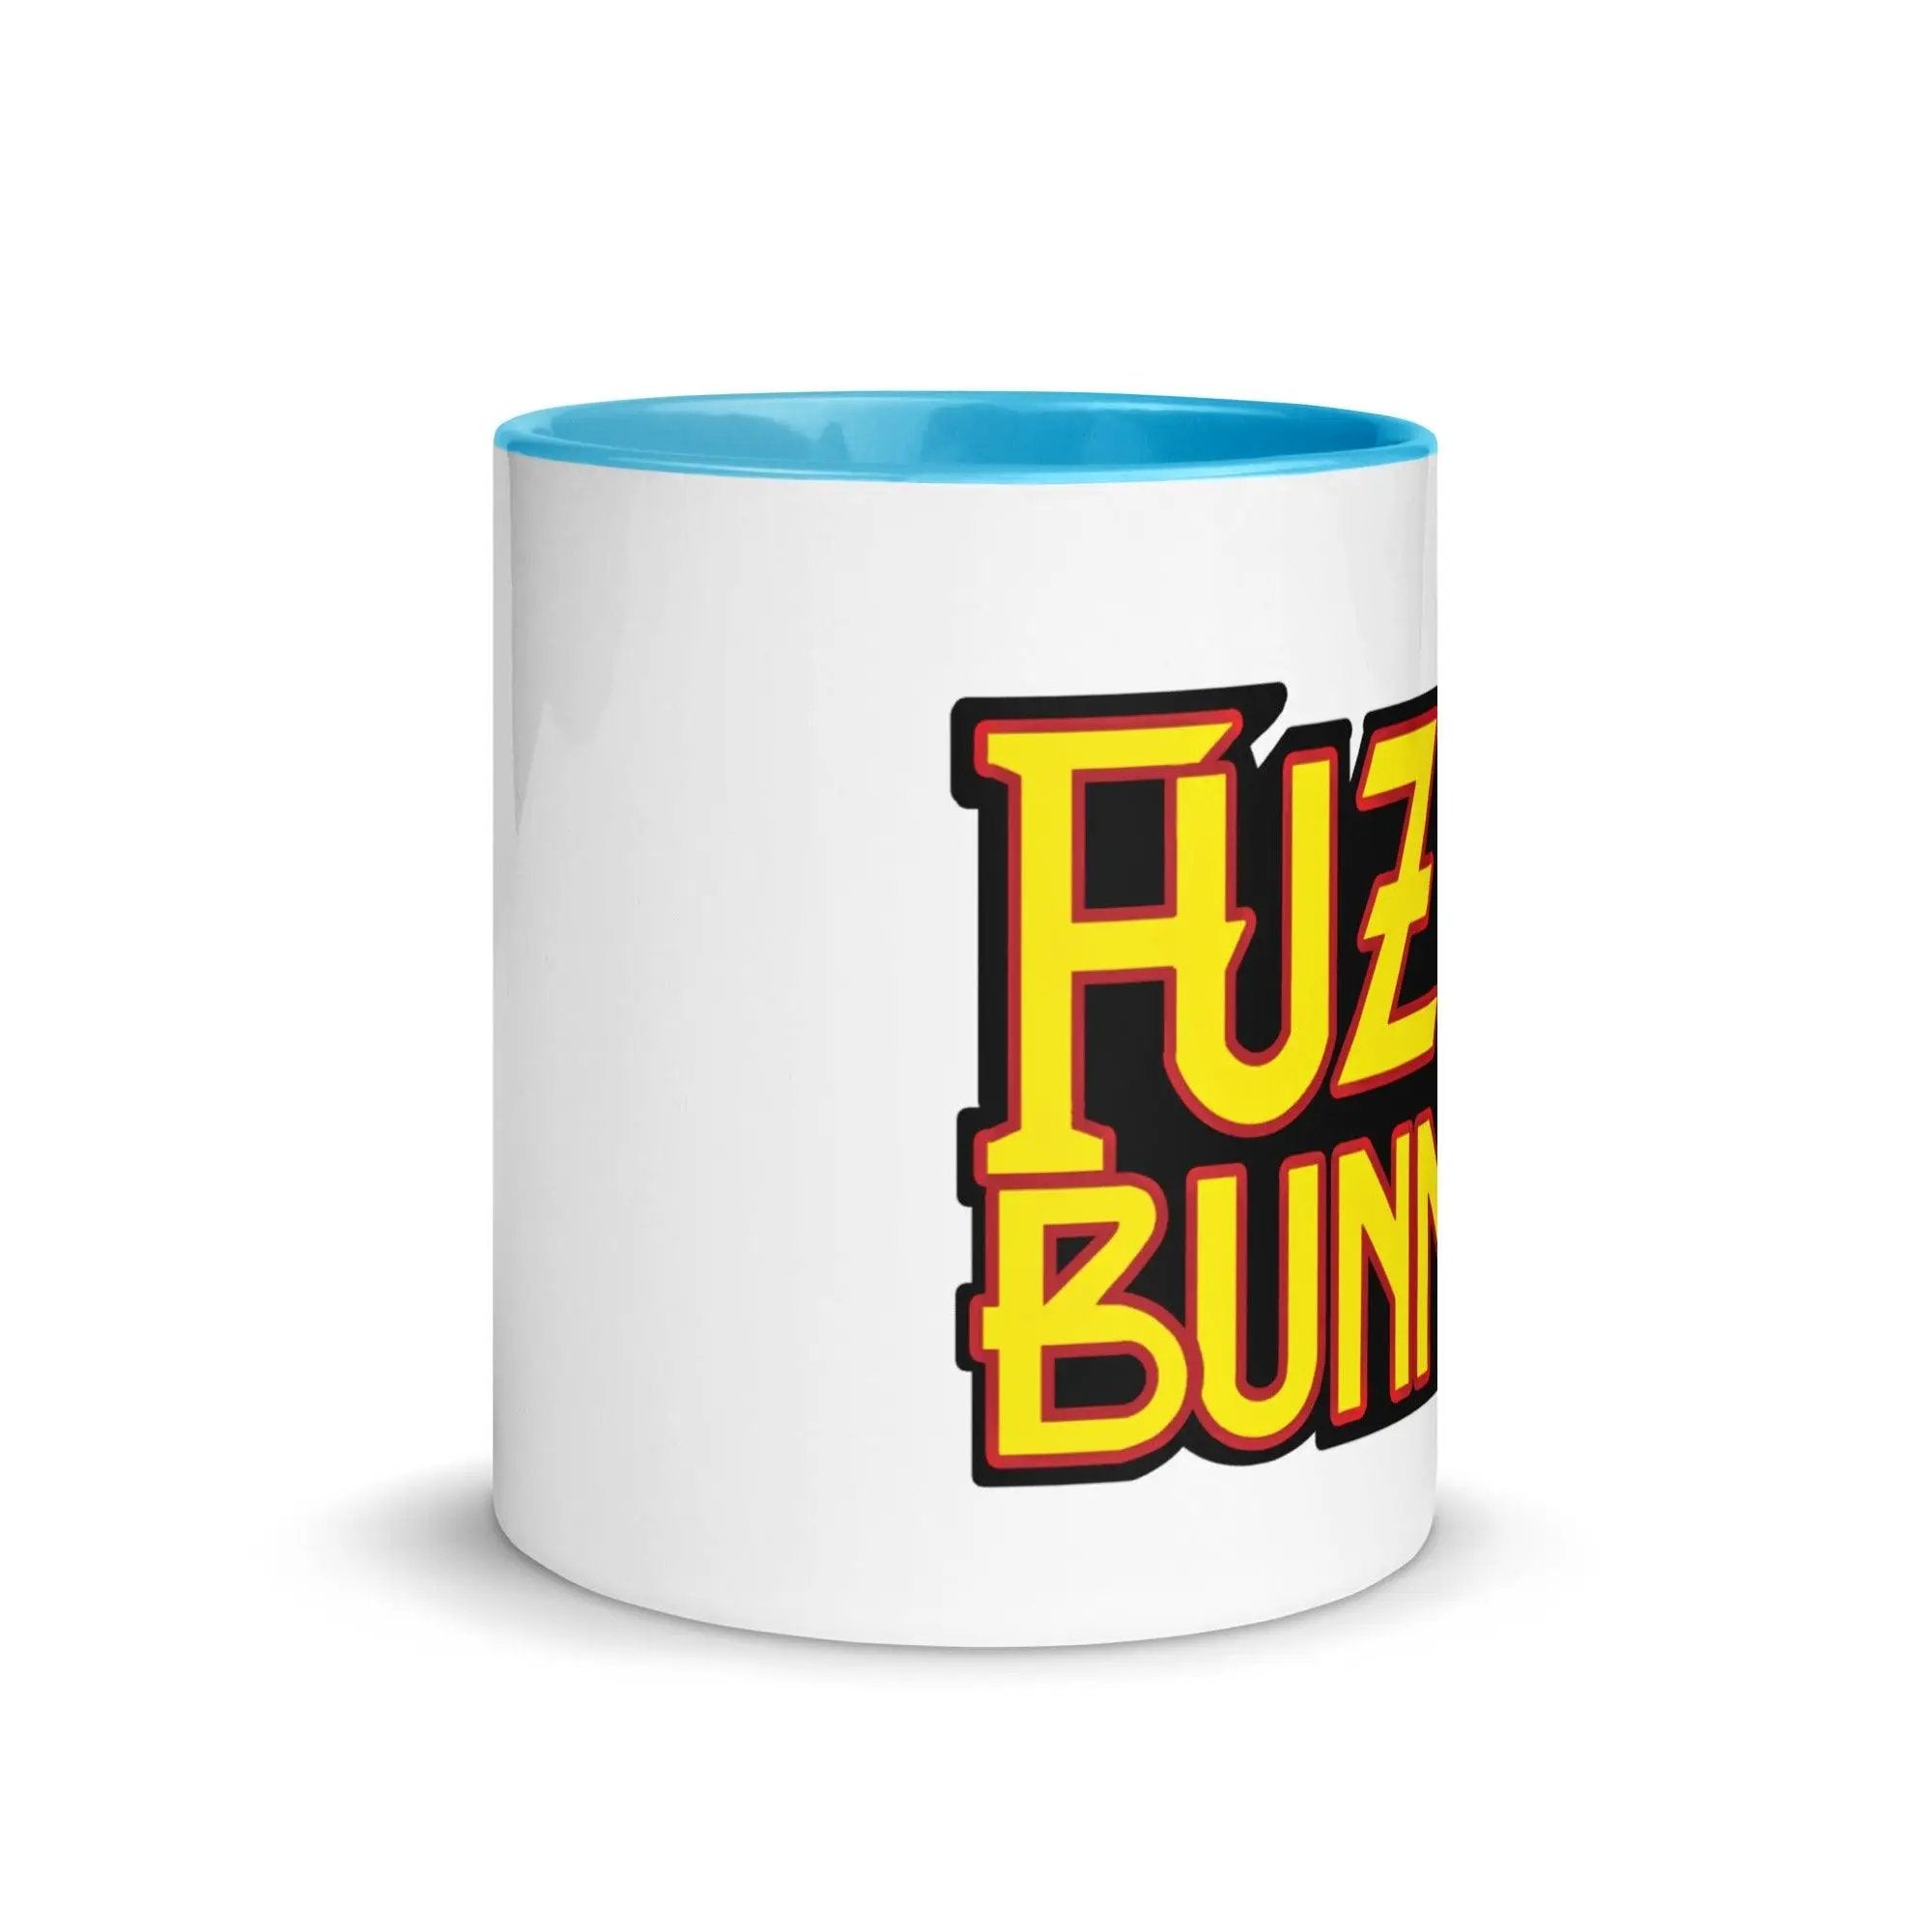 Fuzzy Bunnies Mug with Color Inside